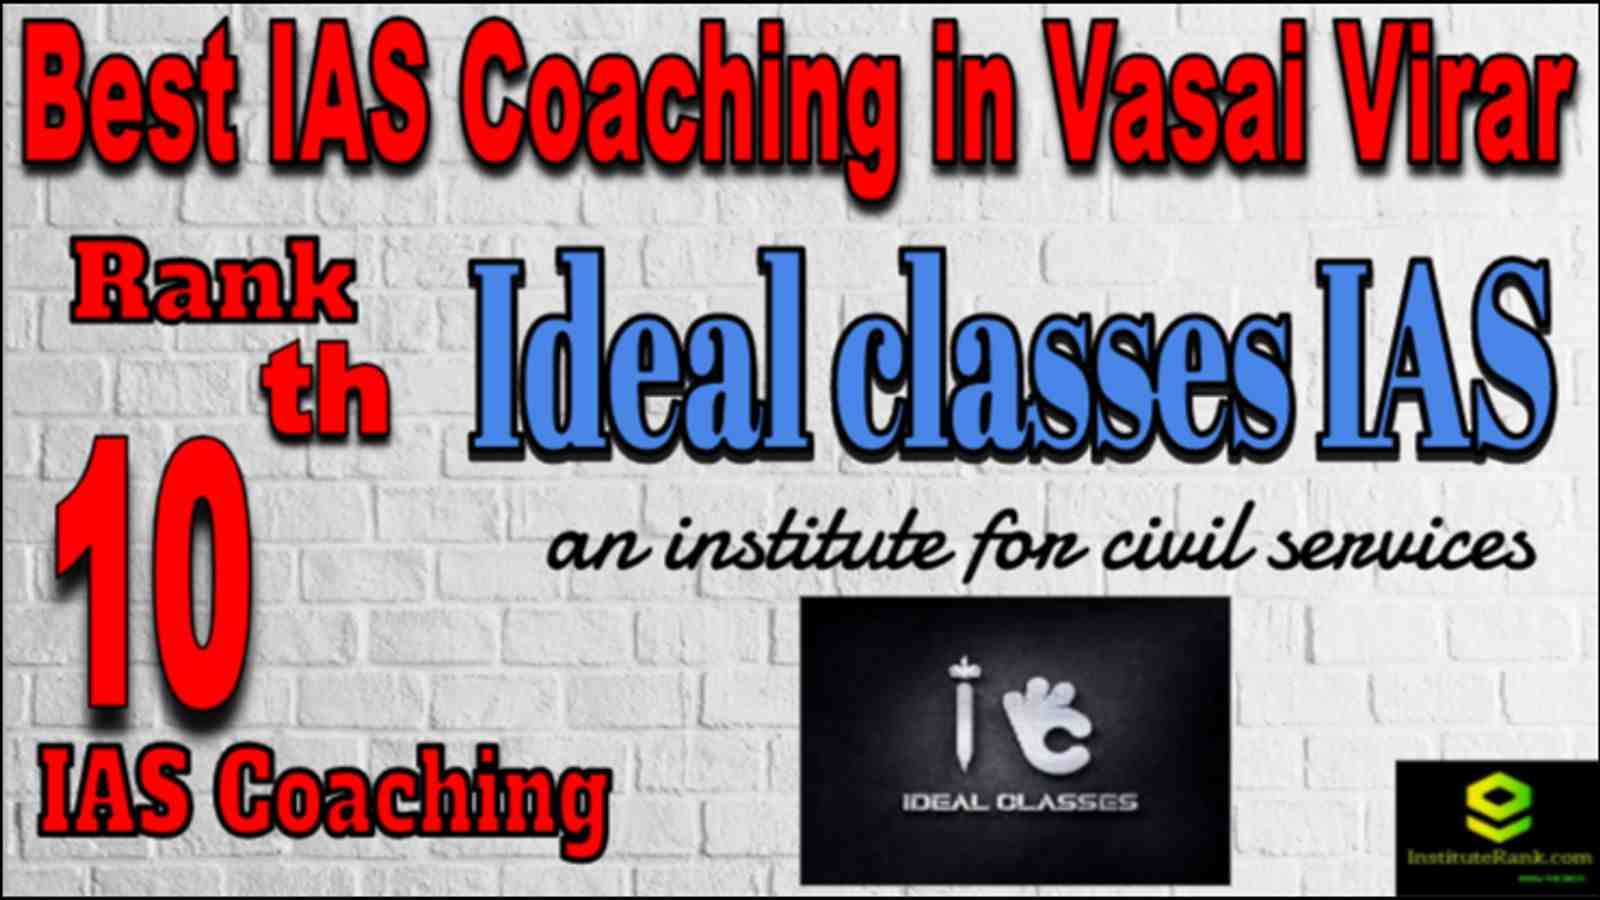 Rank 10 Best IAS coaching in vasai virar